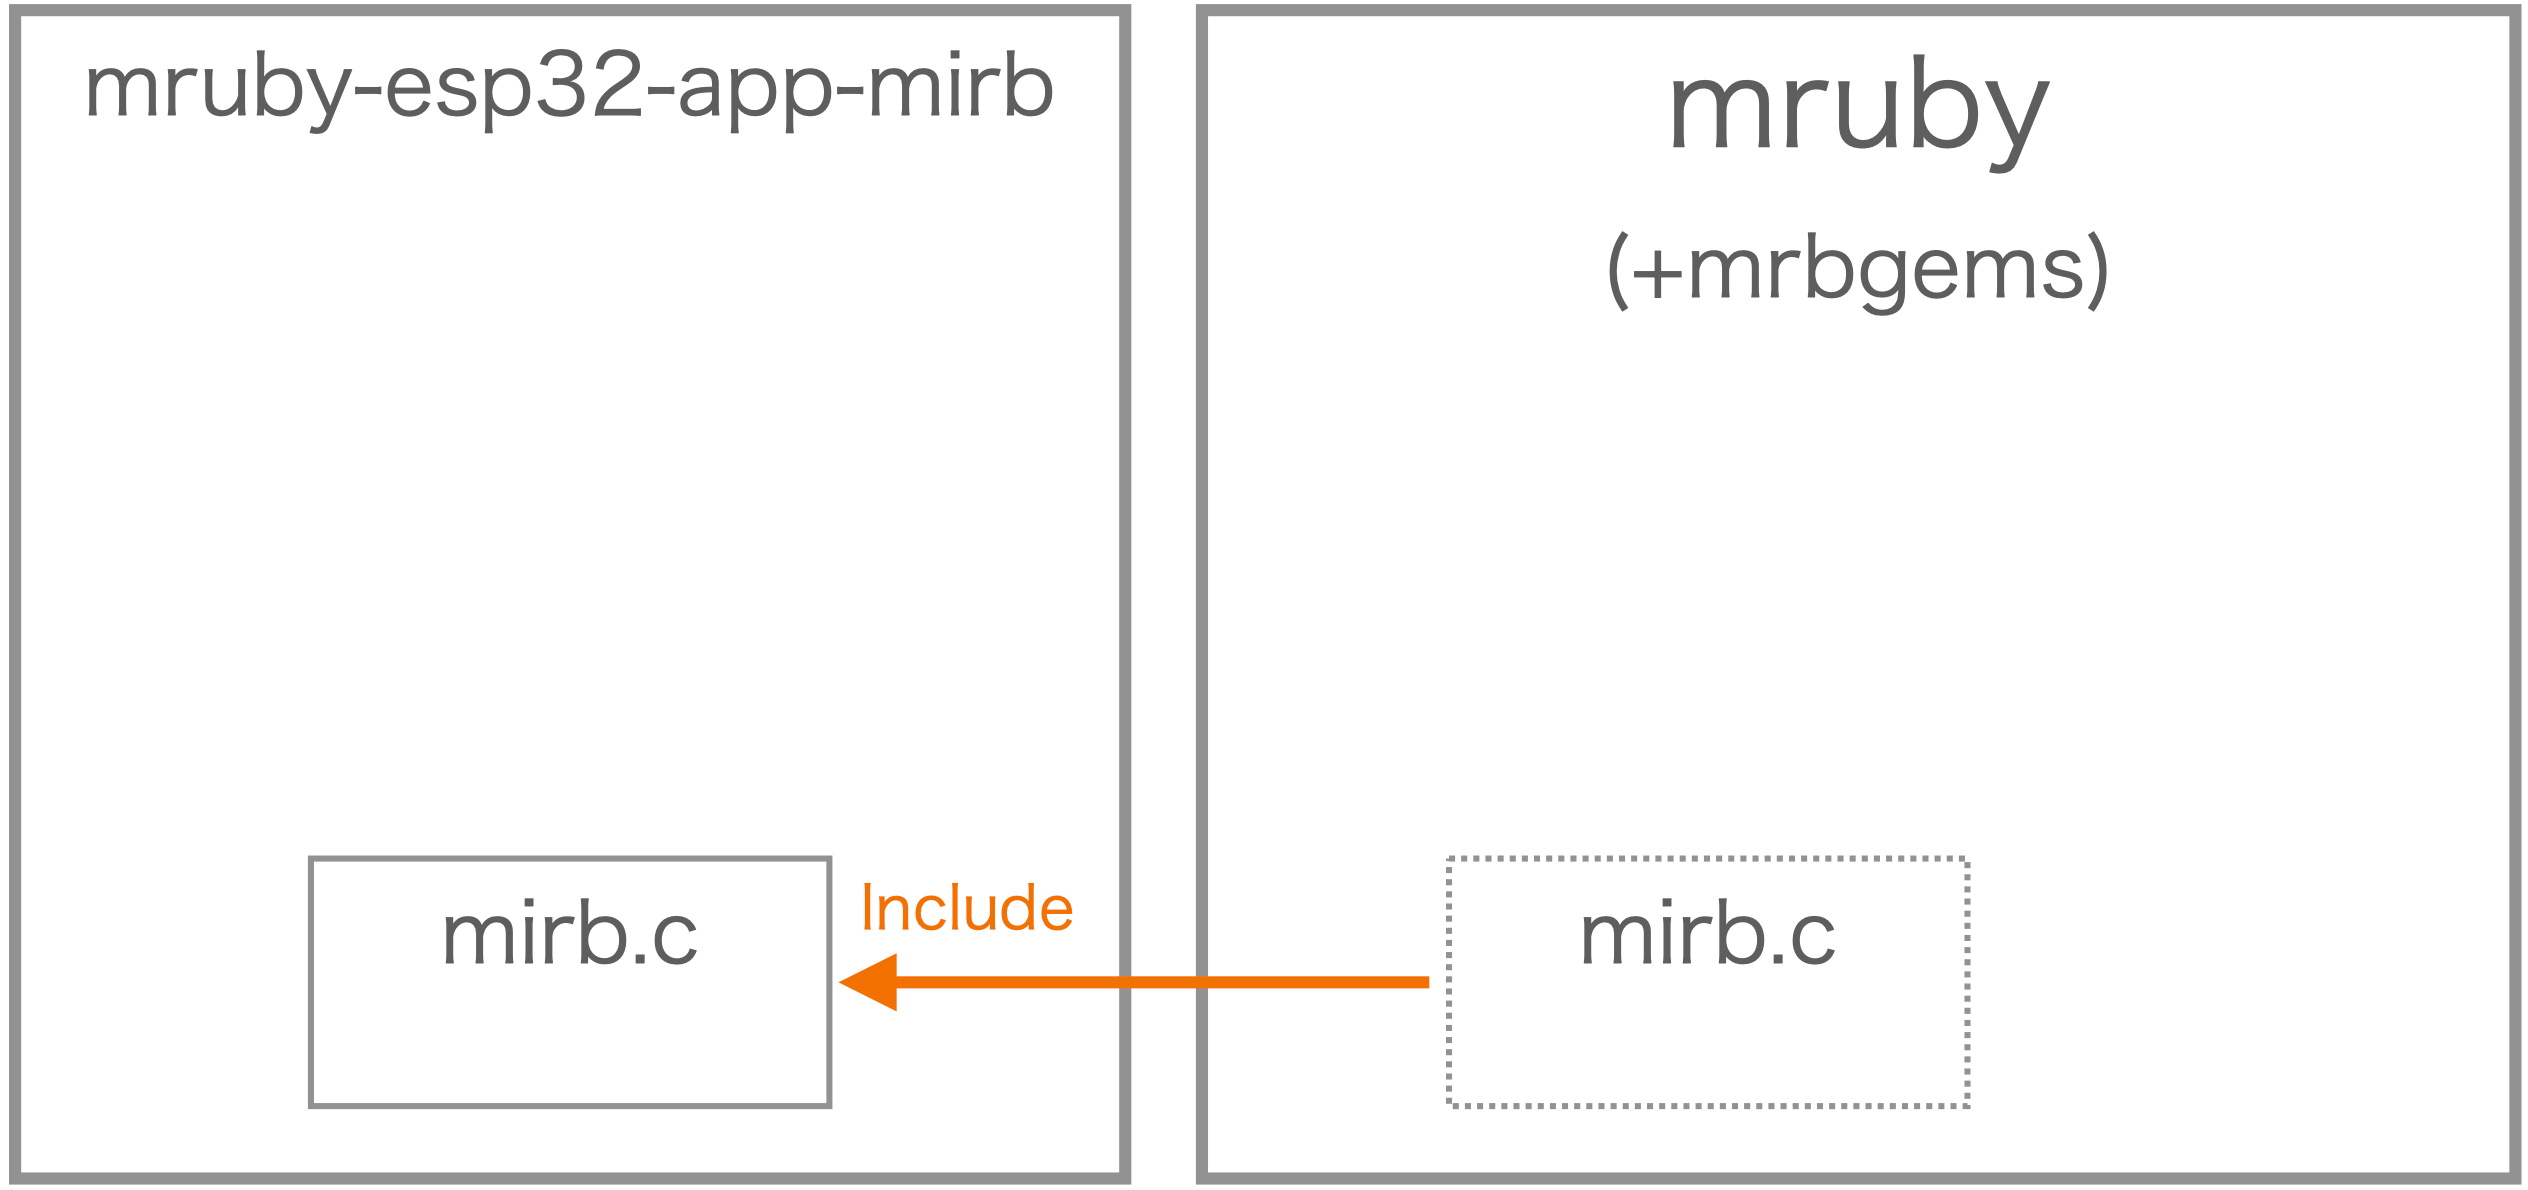 mruby-esp32-app-mirb